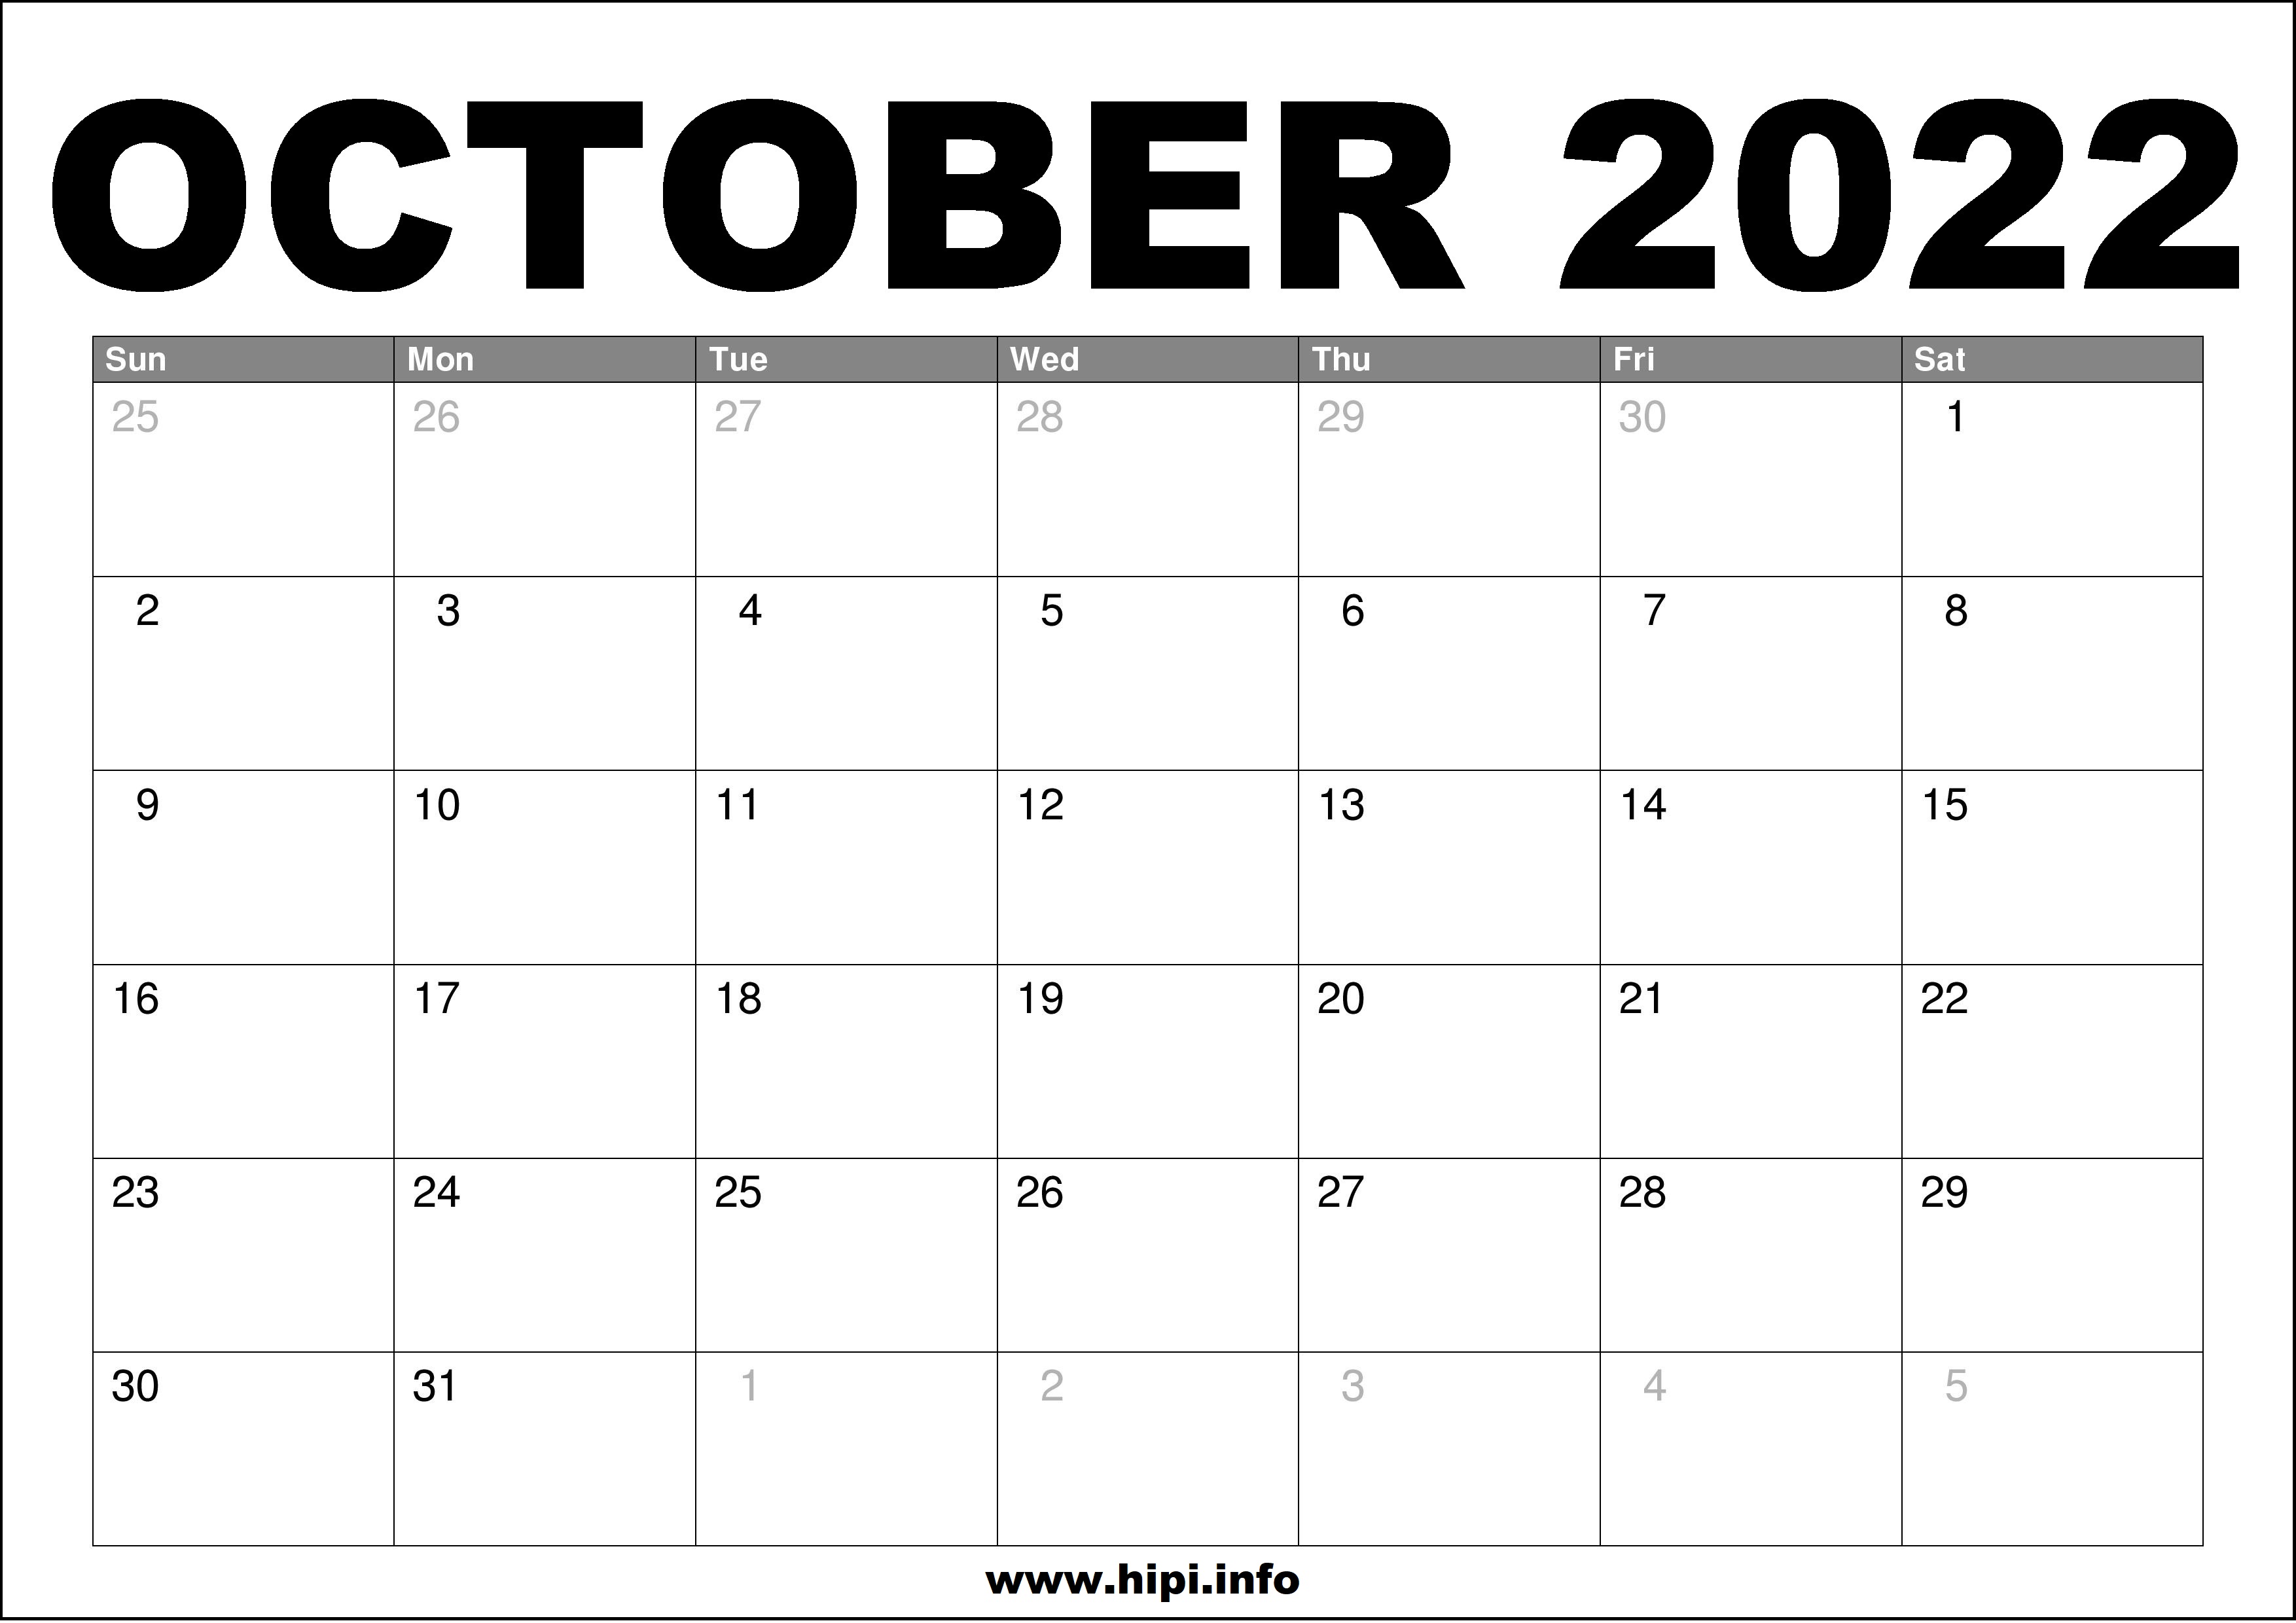 October Calendar Template 2022 October 2022 Calendar Printable Free - Hipi.info | Calendars Printable Free